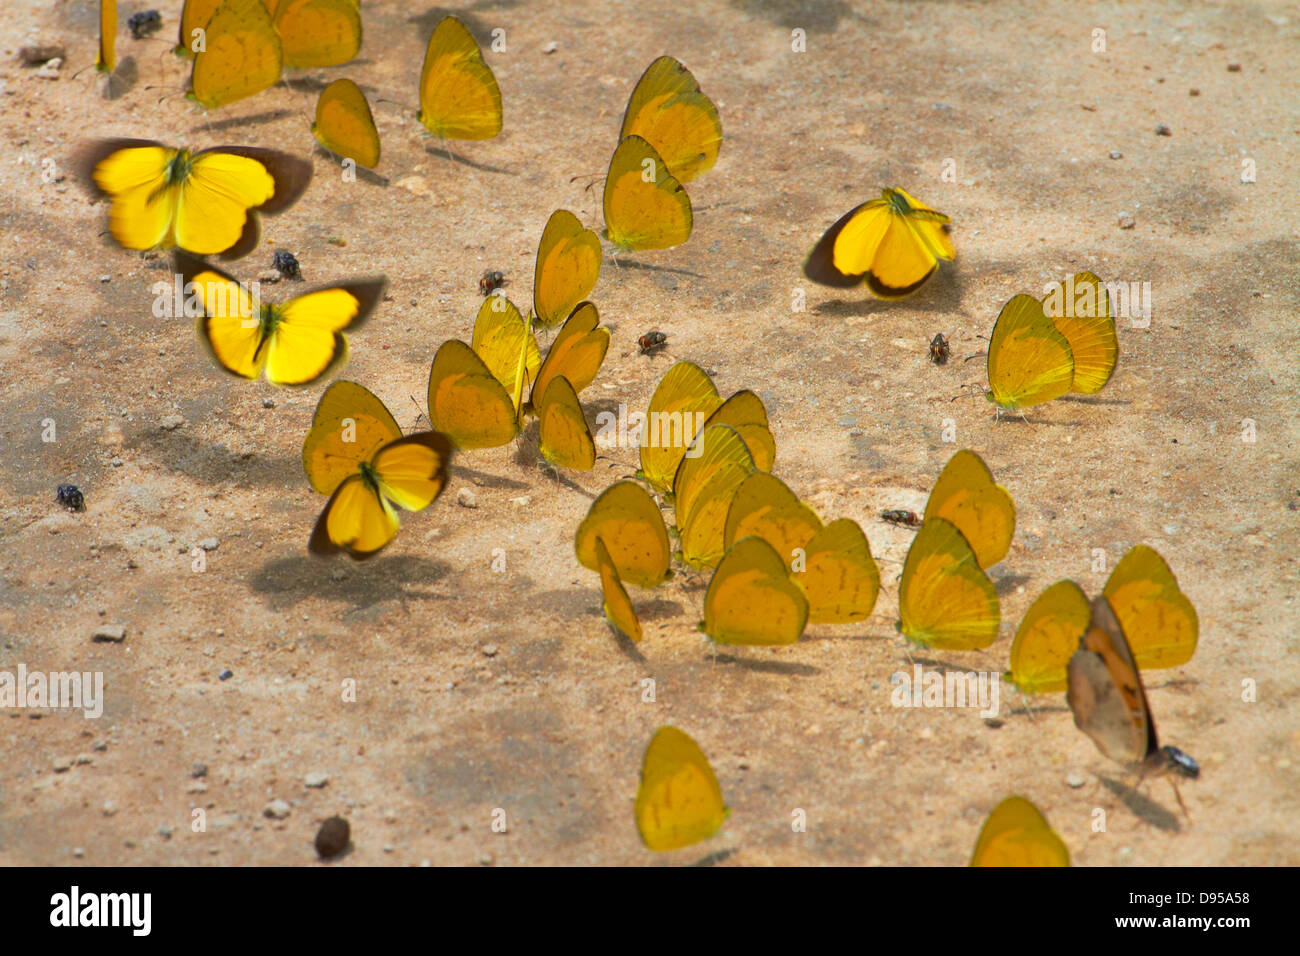 Yellow butterflies on dirt road, Botswana, Africa Stock Photo